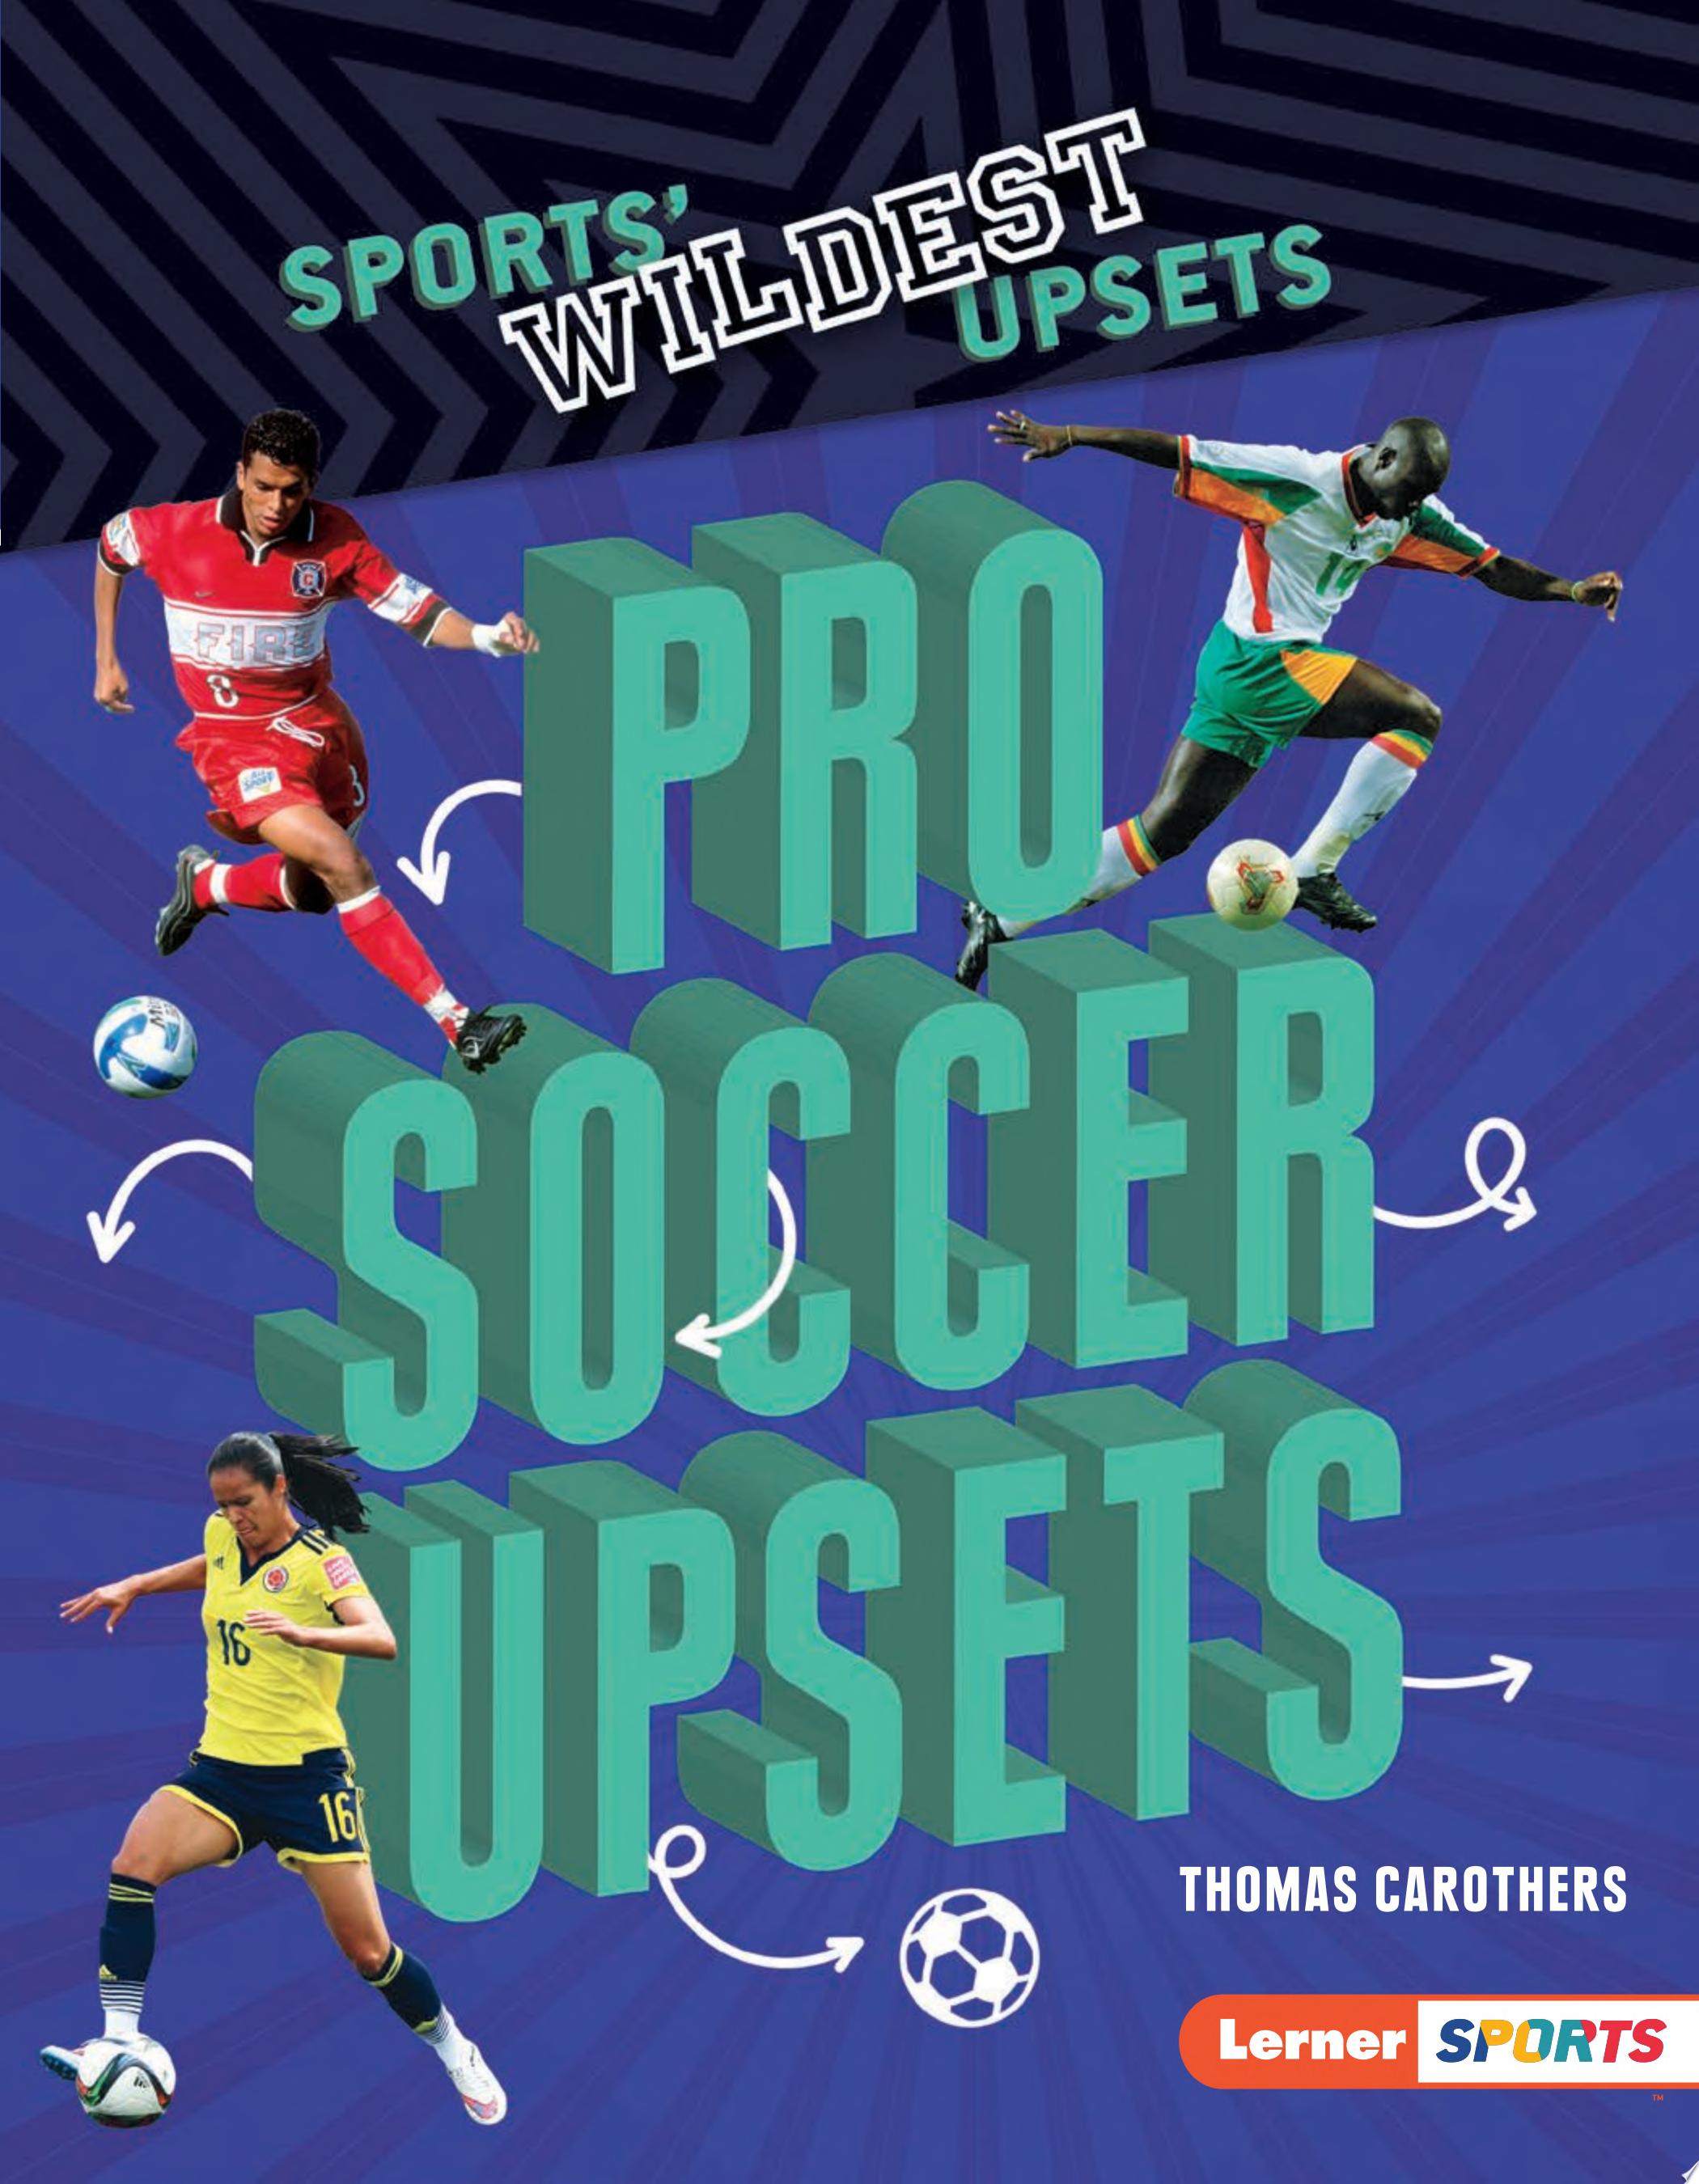 Image for "Pro Soccer Upsets"